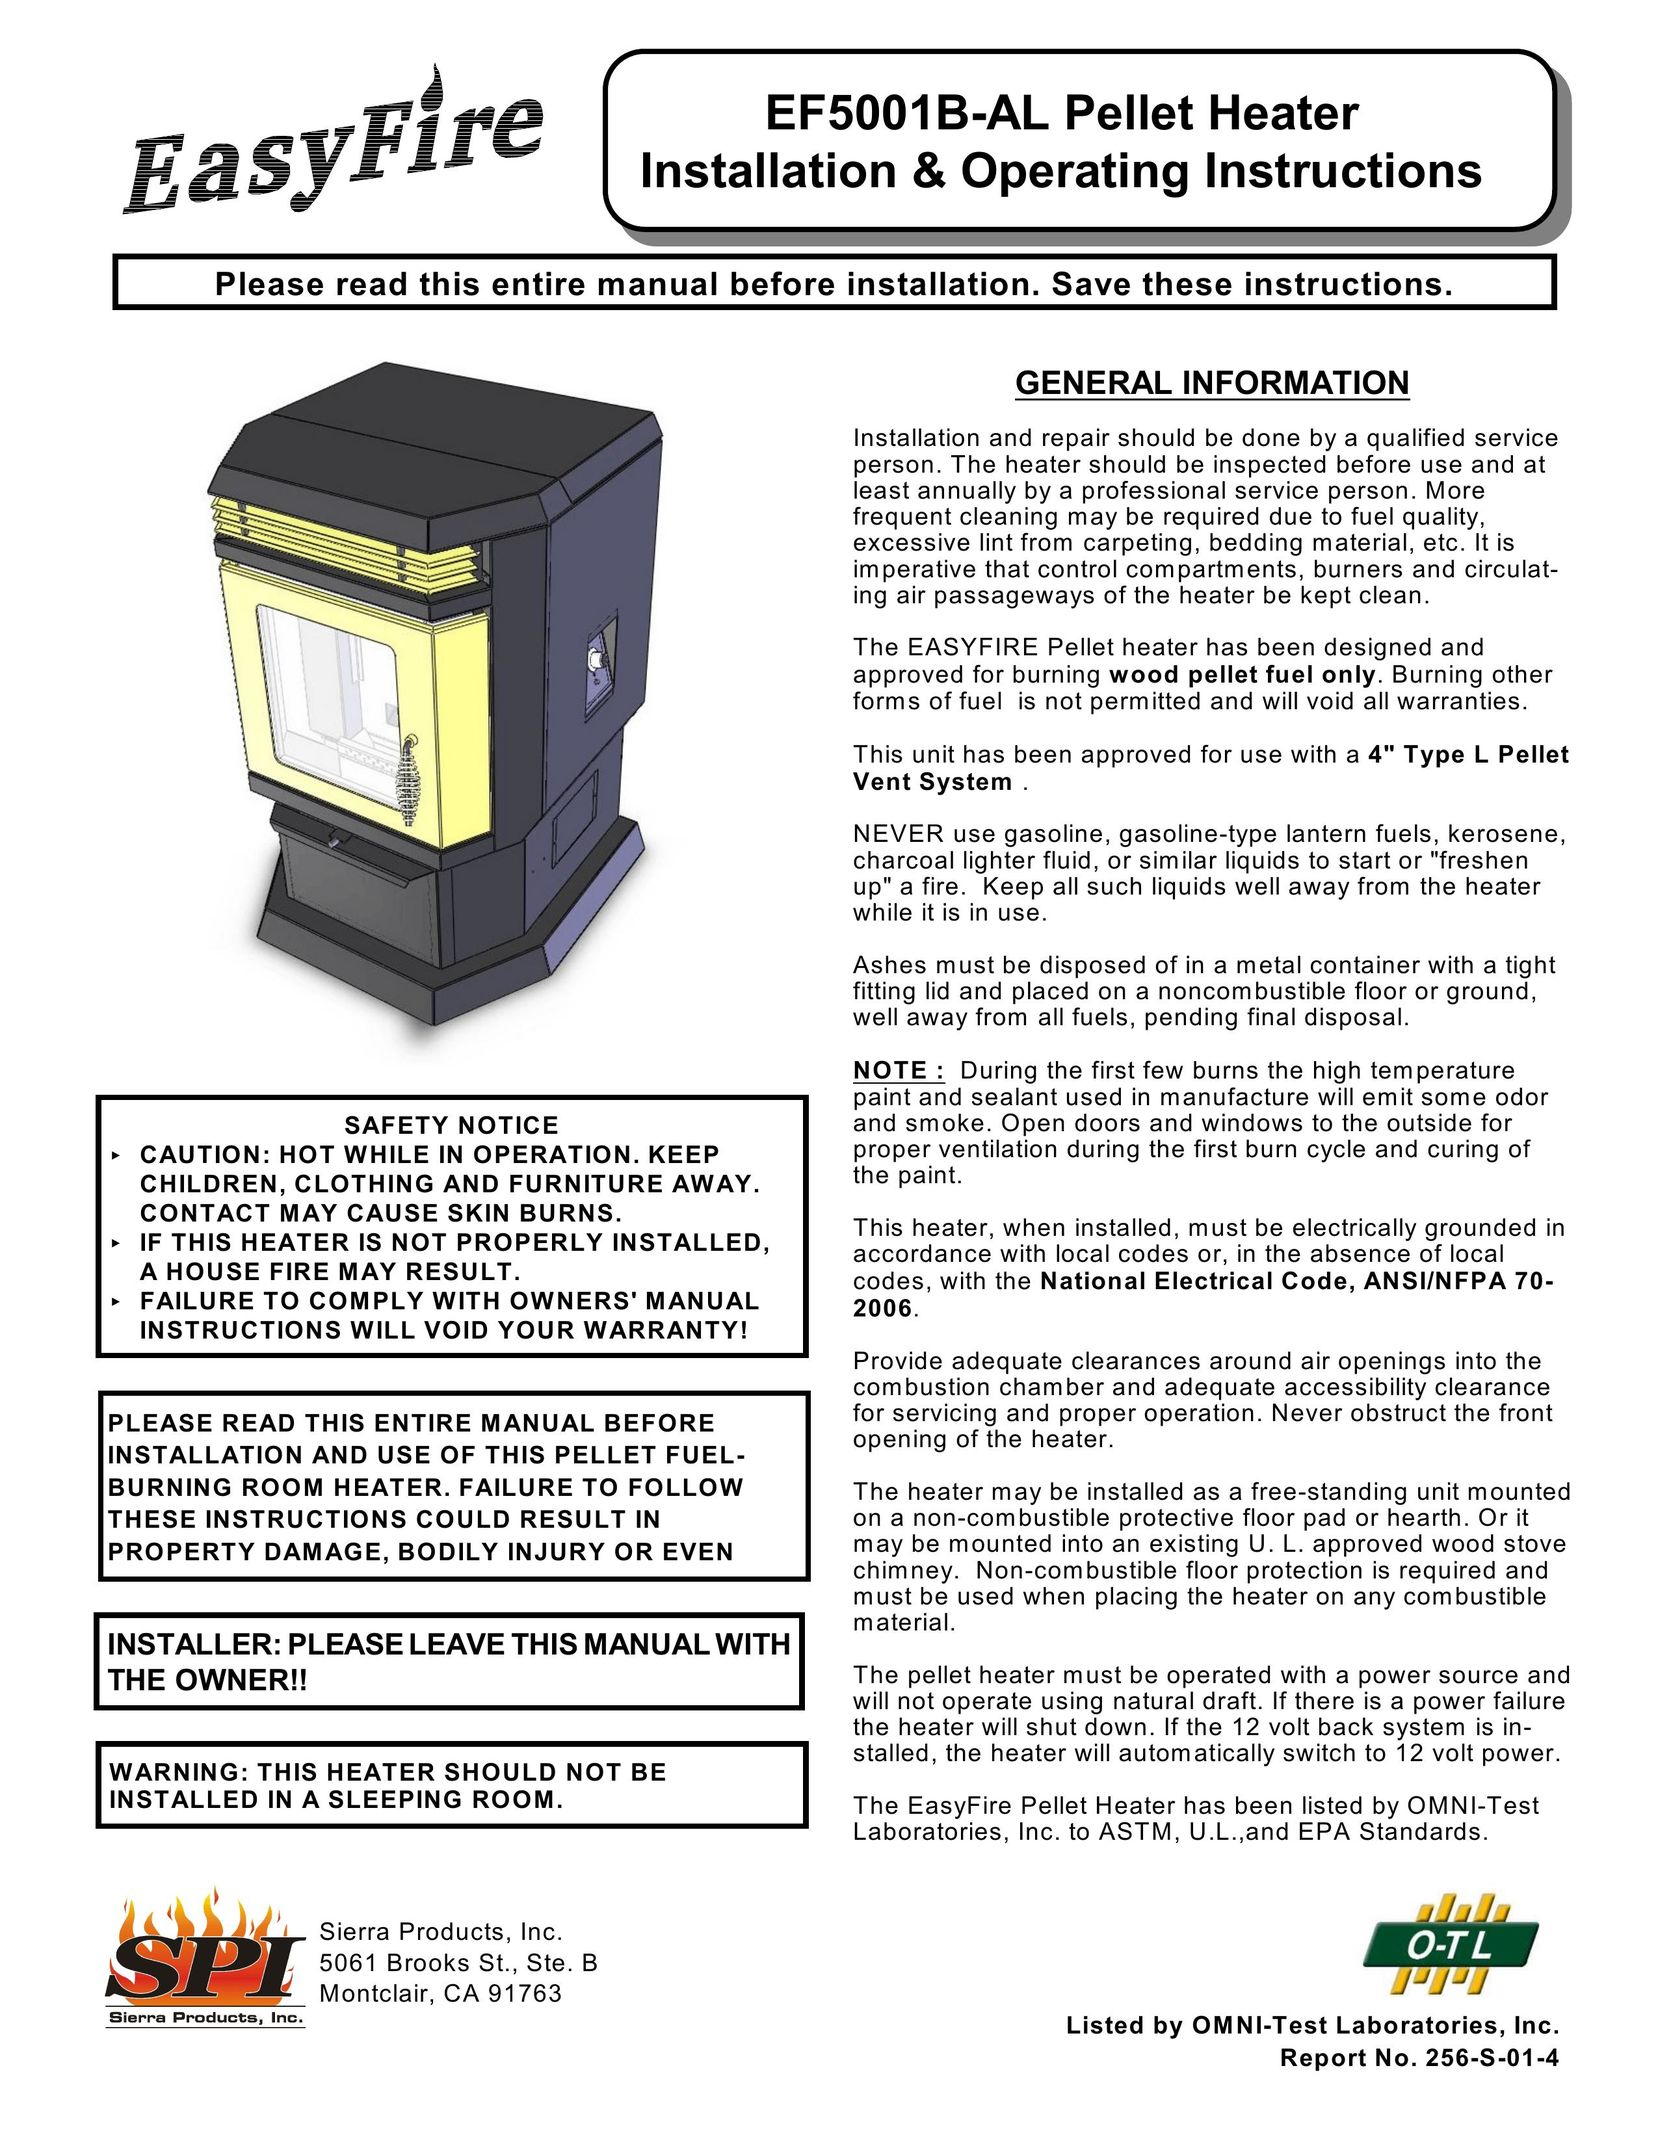 Sierra Products EF5001B-AL Stove User Manual